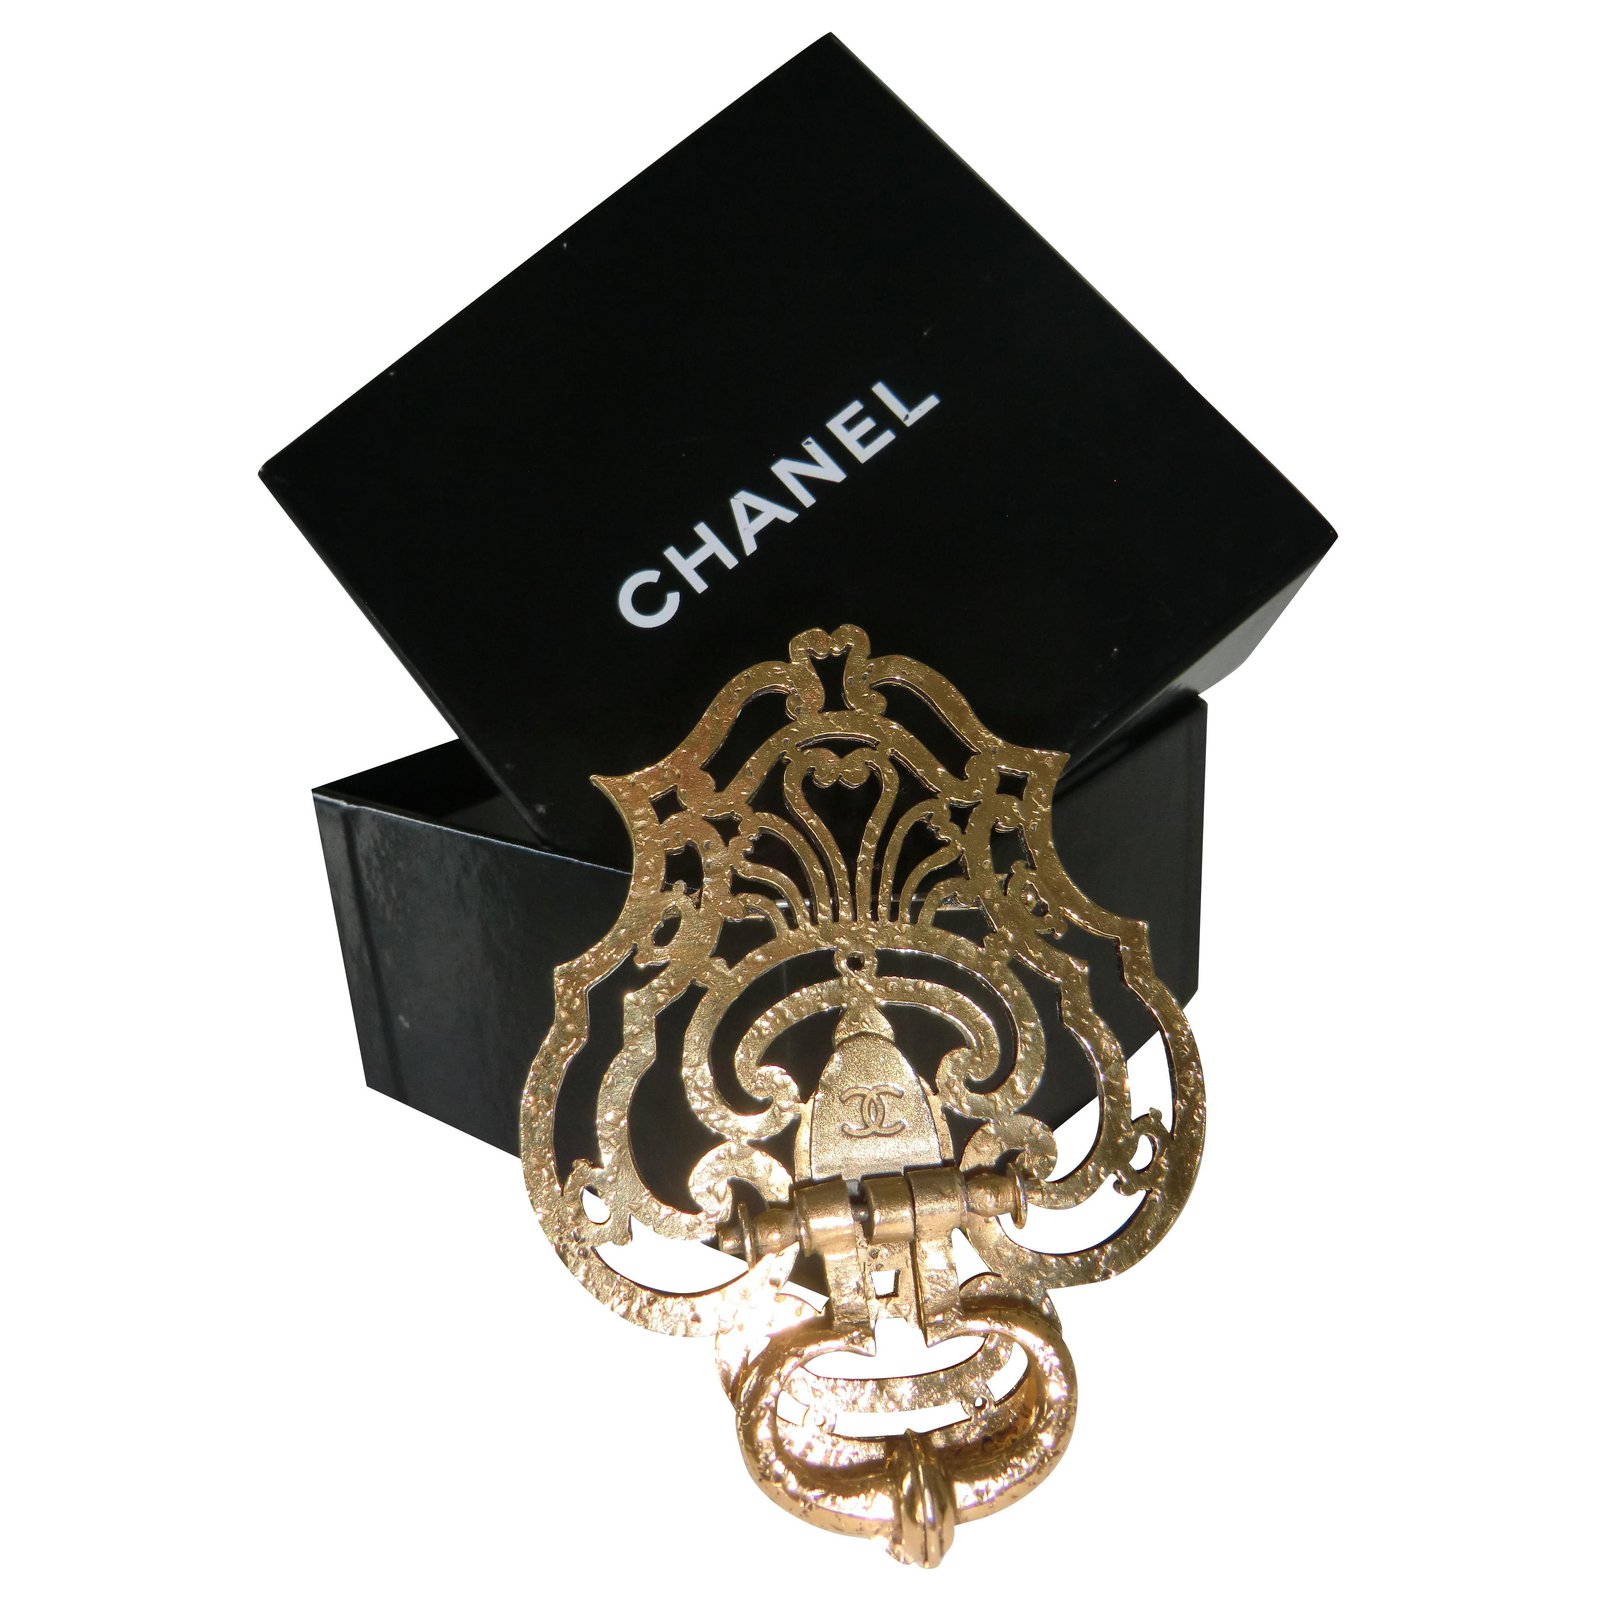 Vintage Chanel brooch